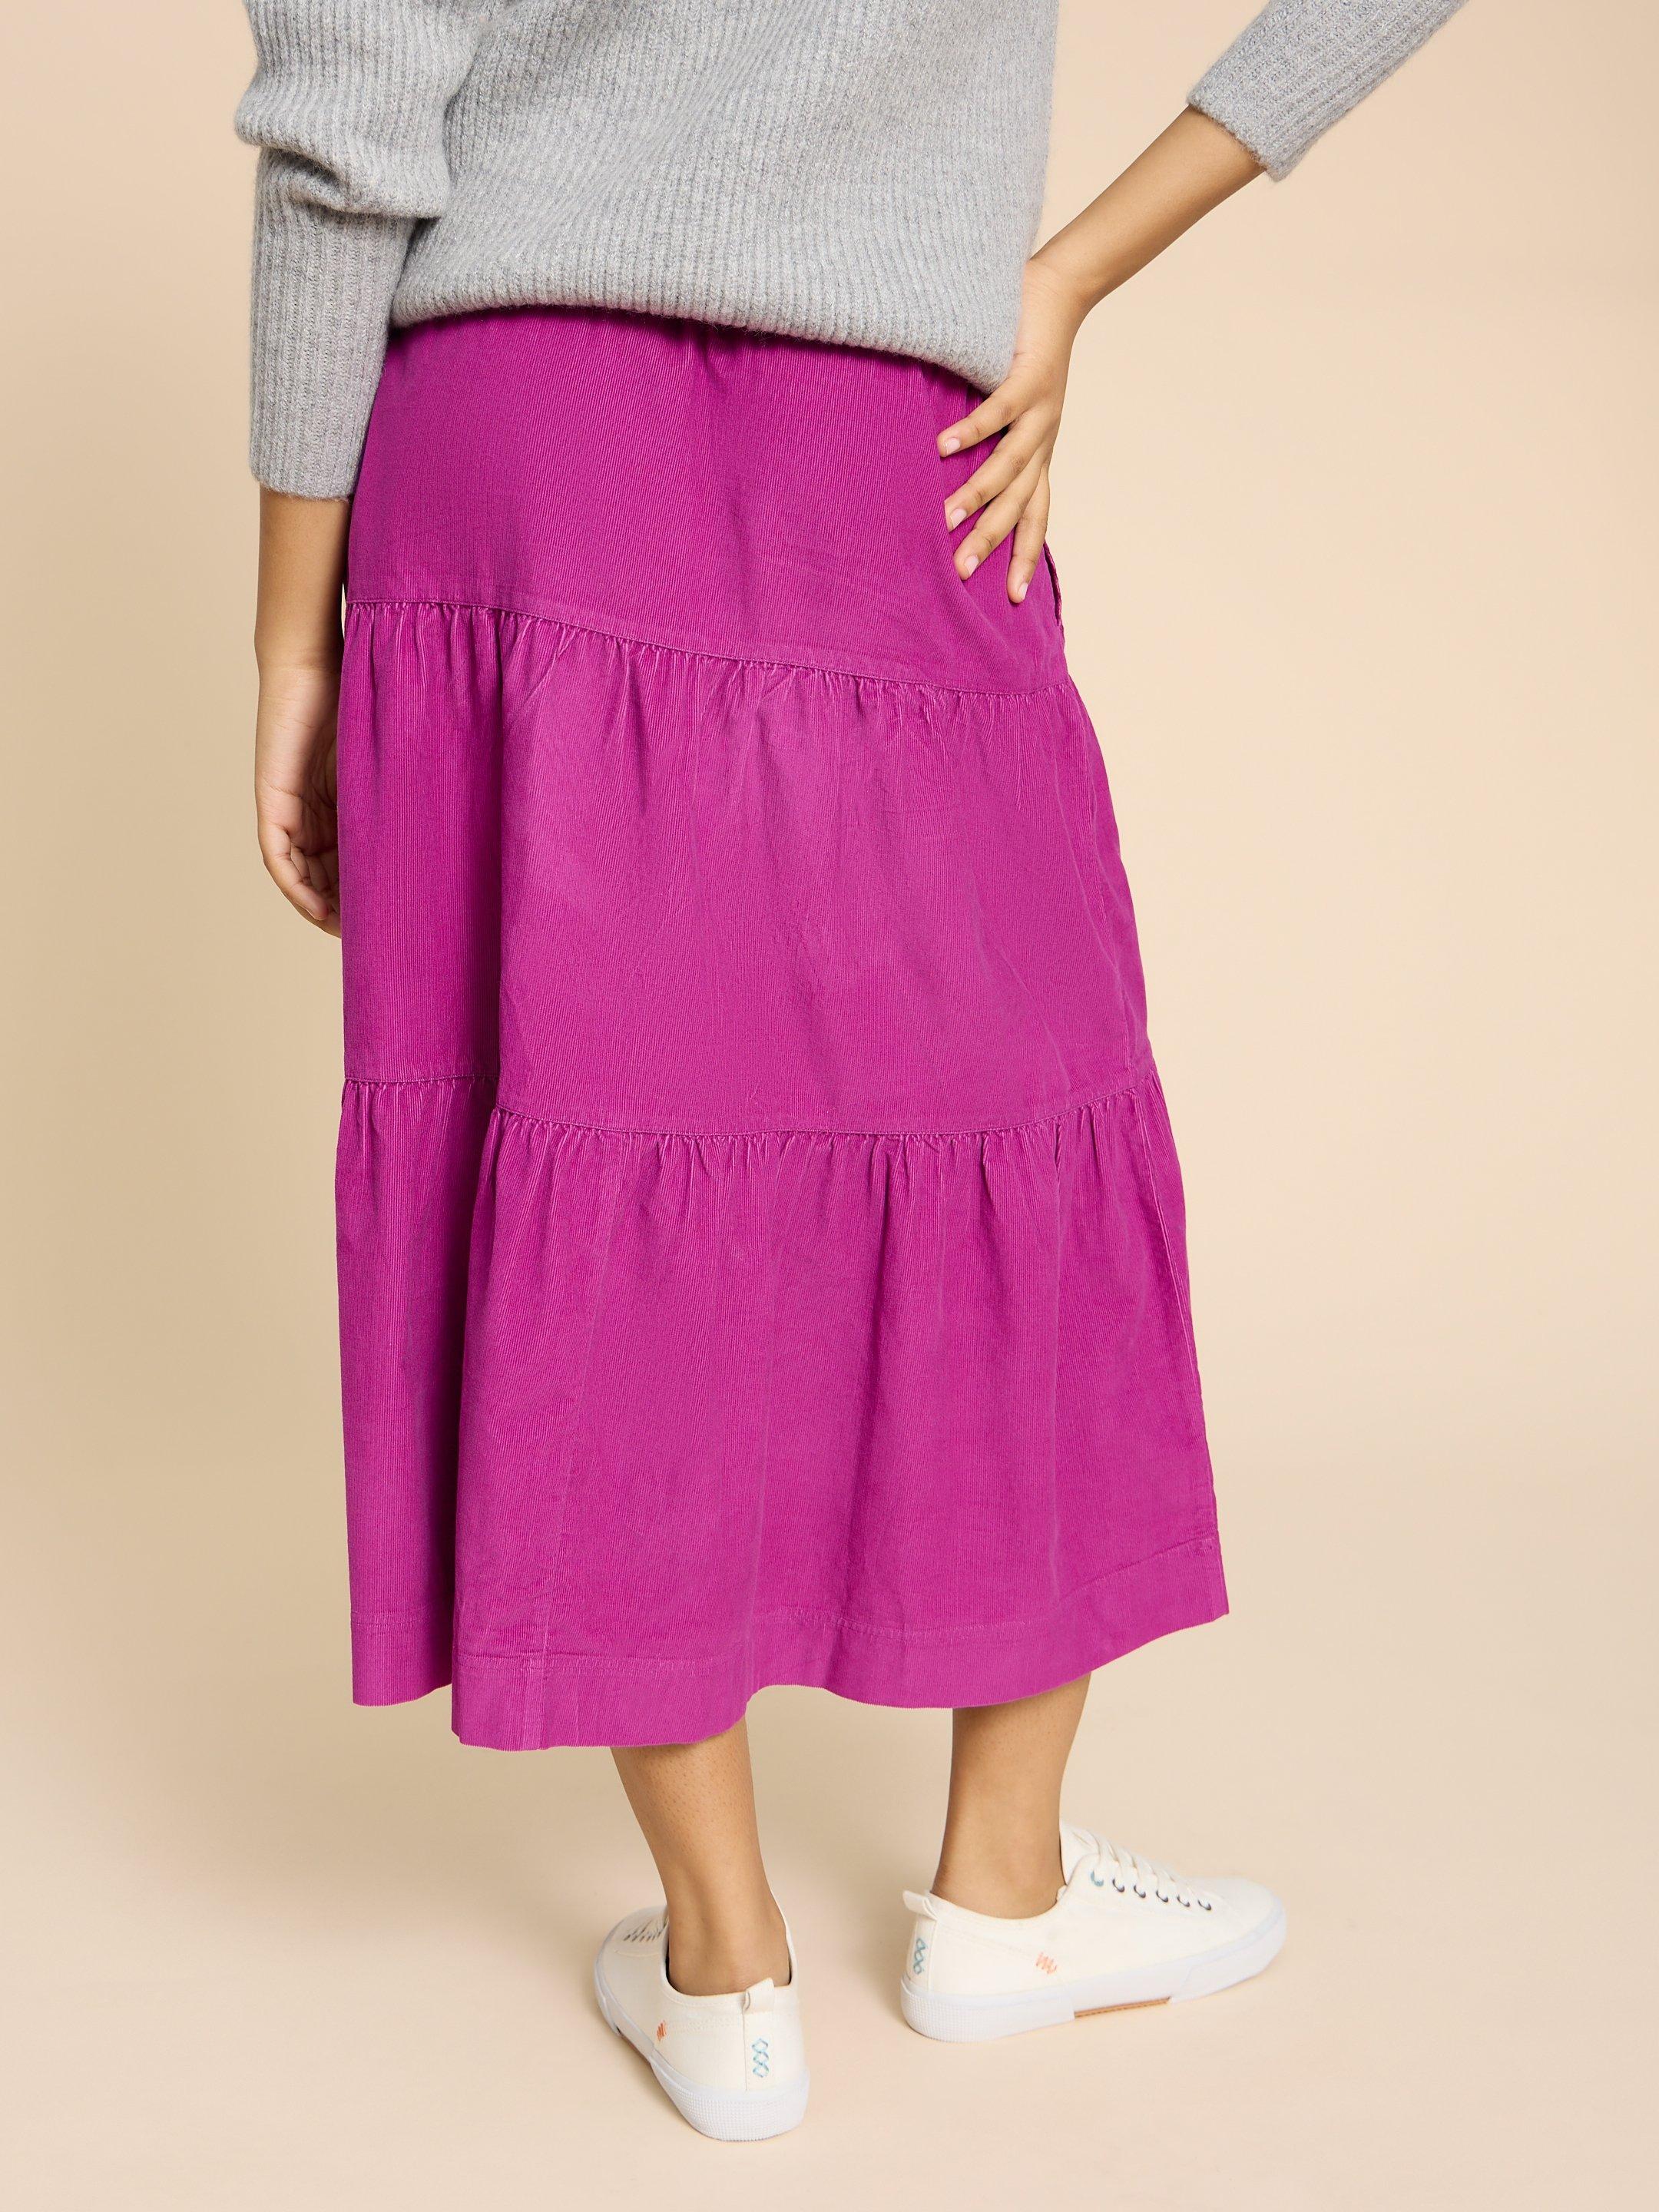 Jade Tiered Cord Skirt in BRT PINK - MODEL BACK